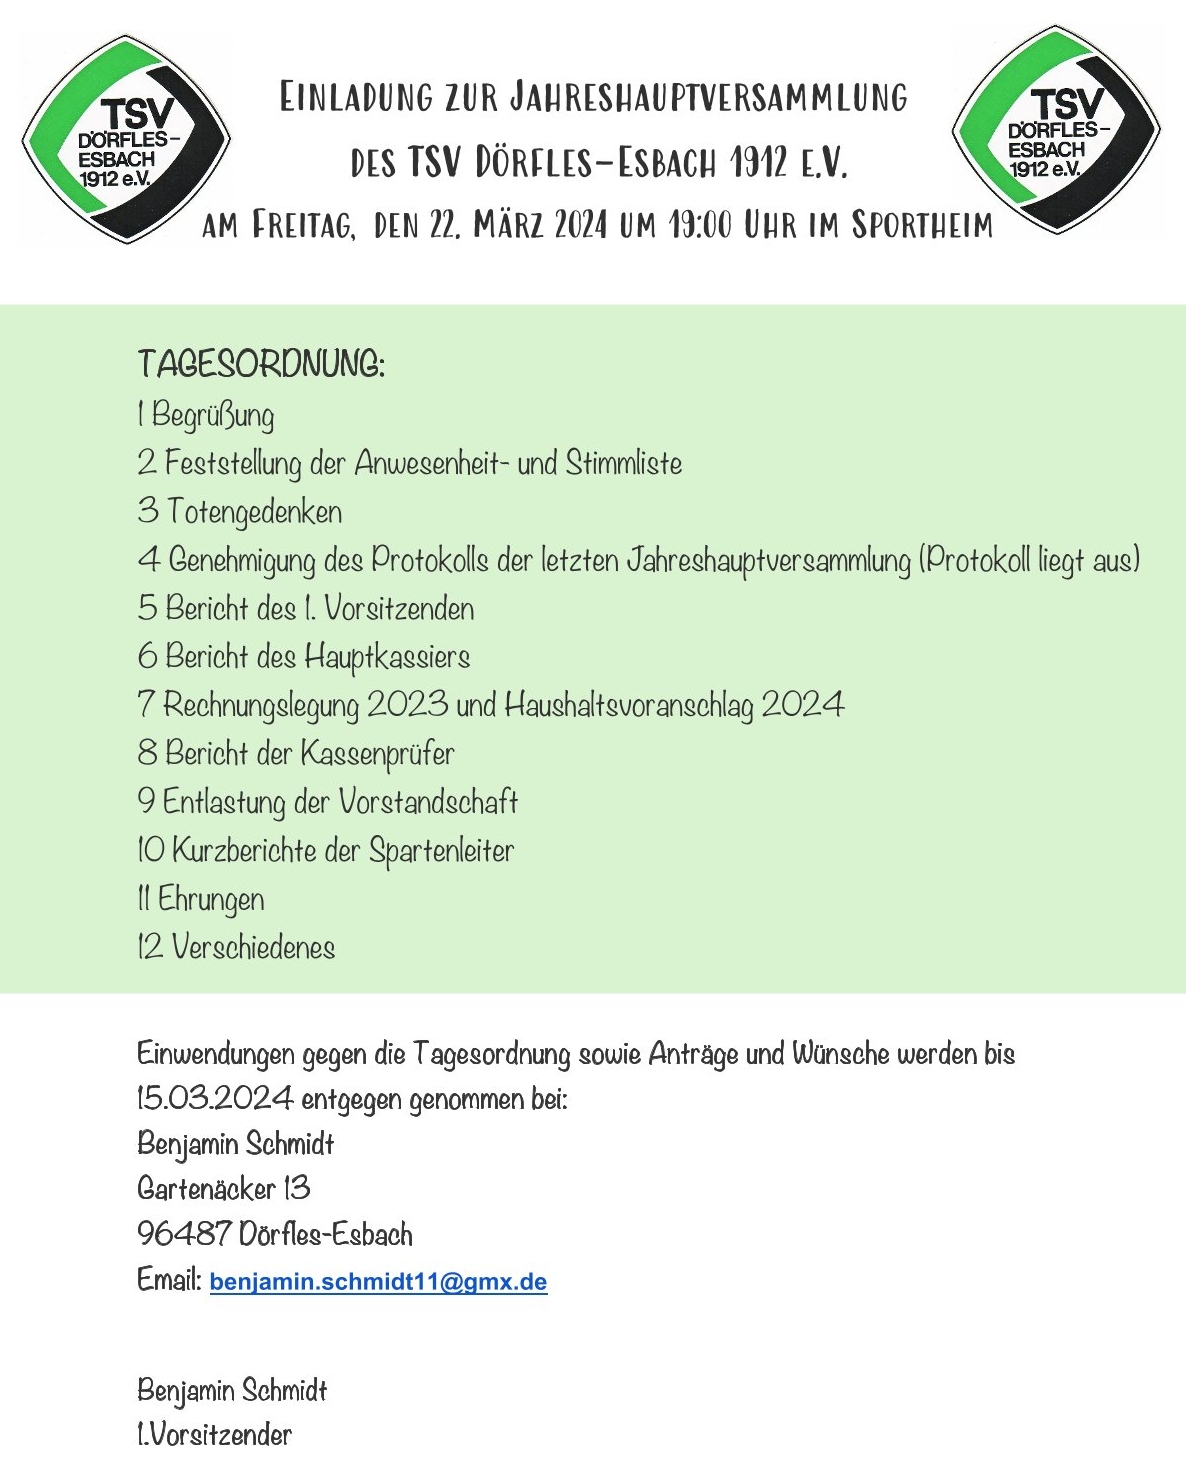 TSV Einladung JHV 2024